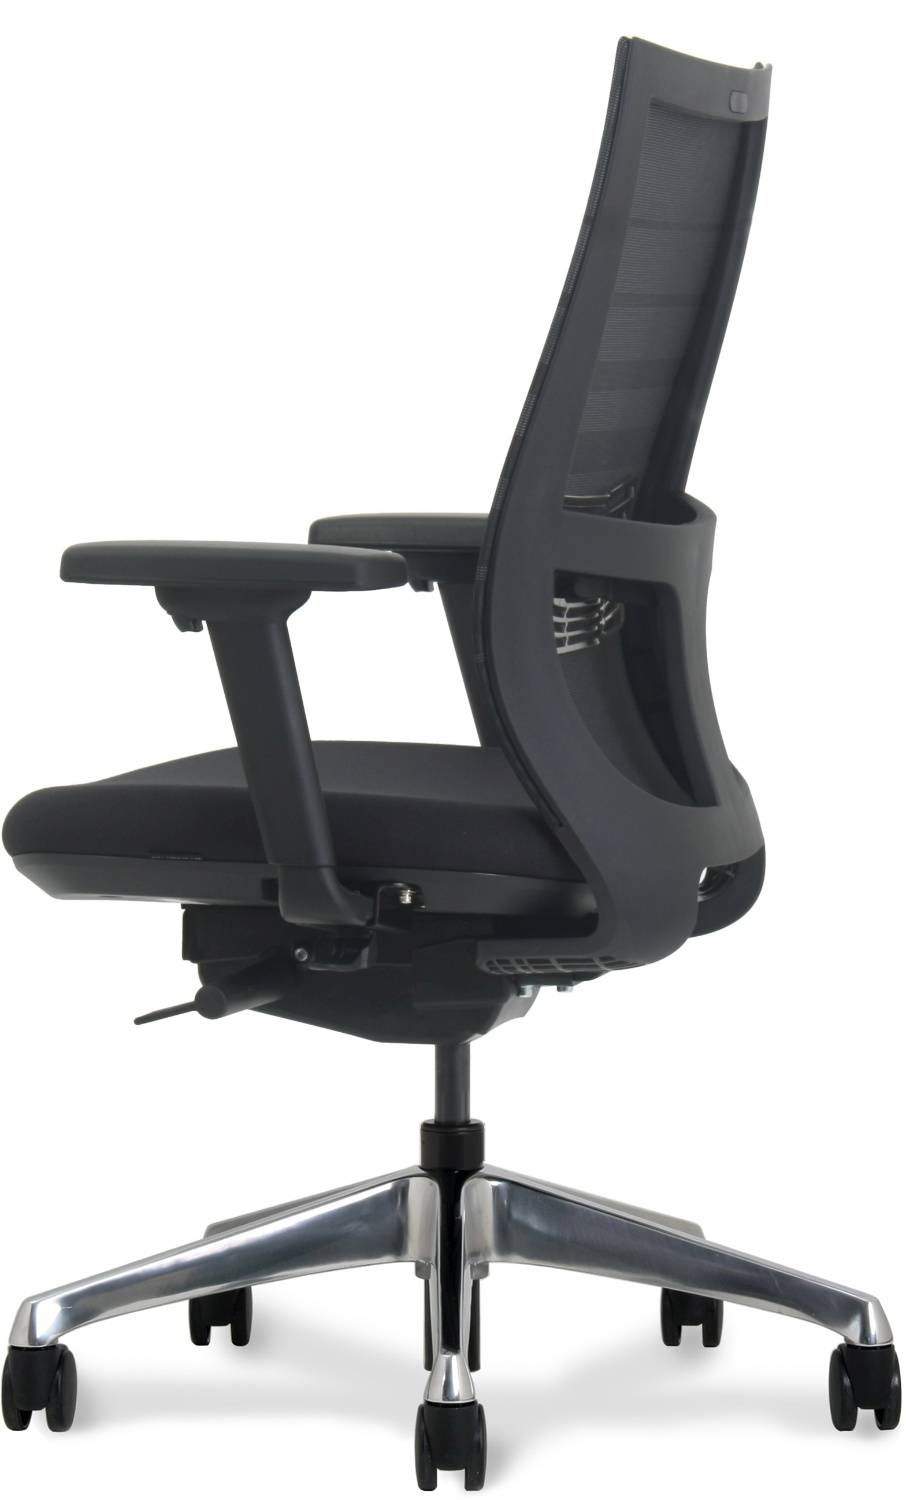 Office chair design Pilas